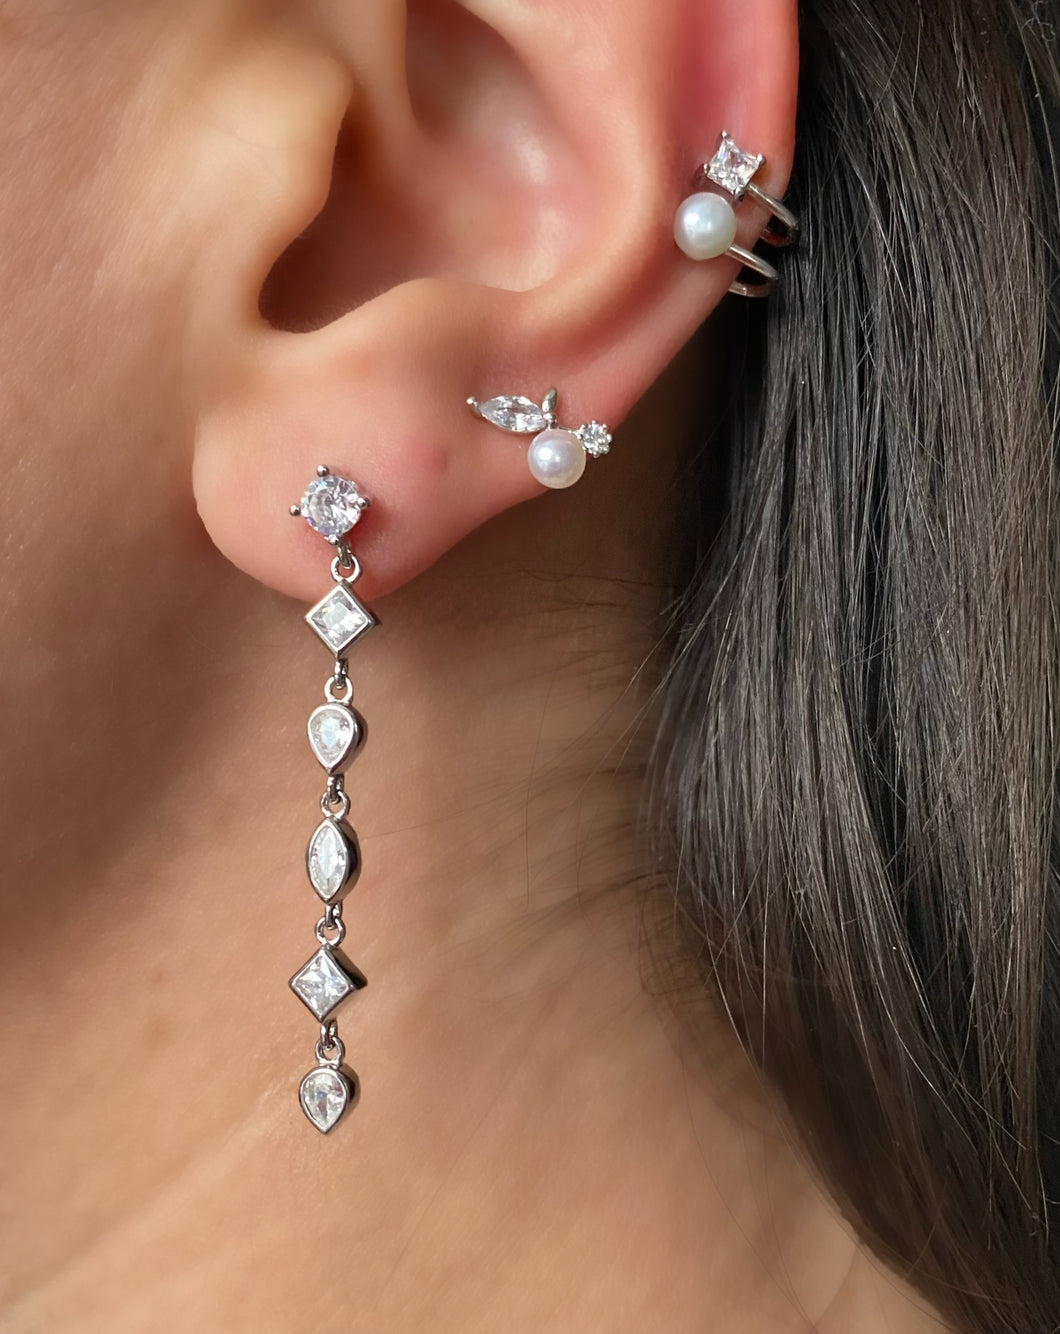 Cocktail dress earrings